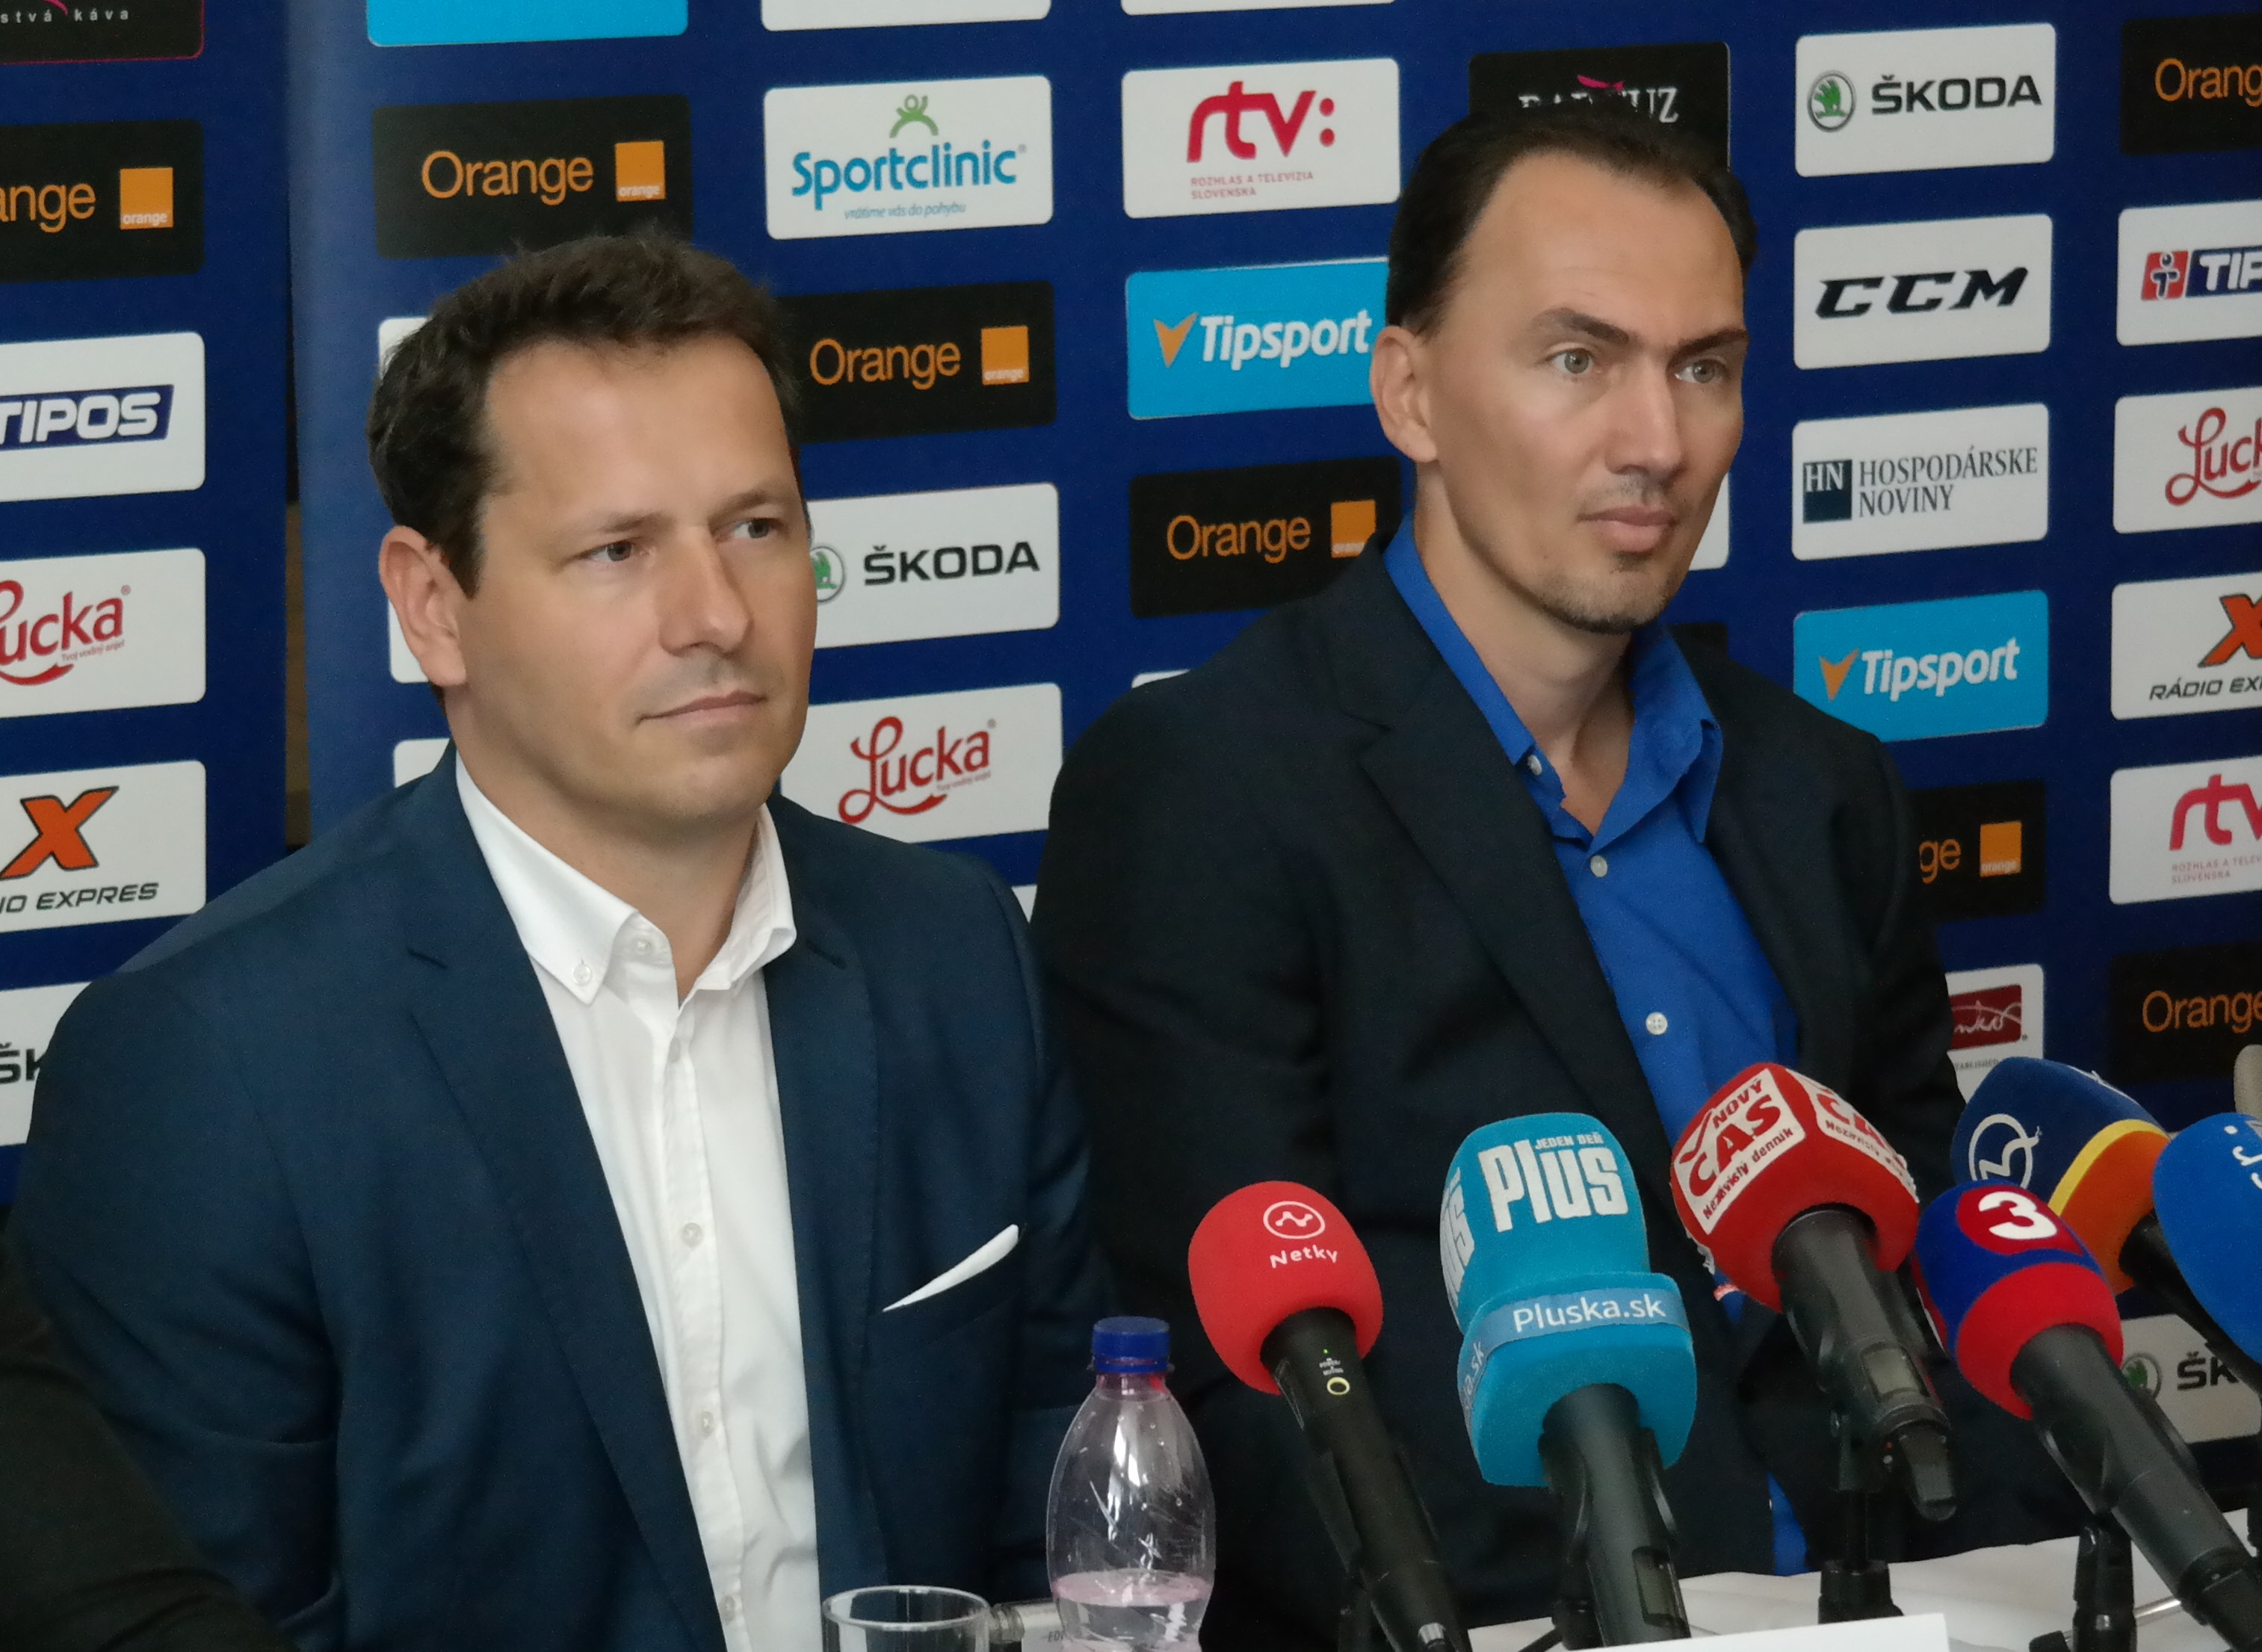 Satan be gone: Miroslav Satan calls it a career after IIHF worlds